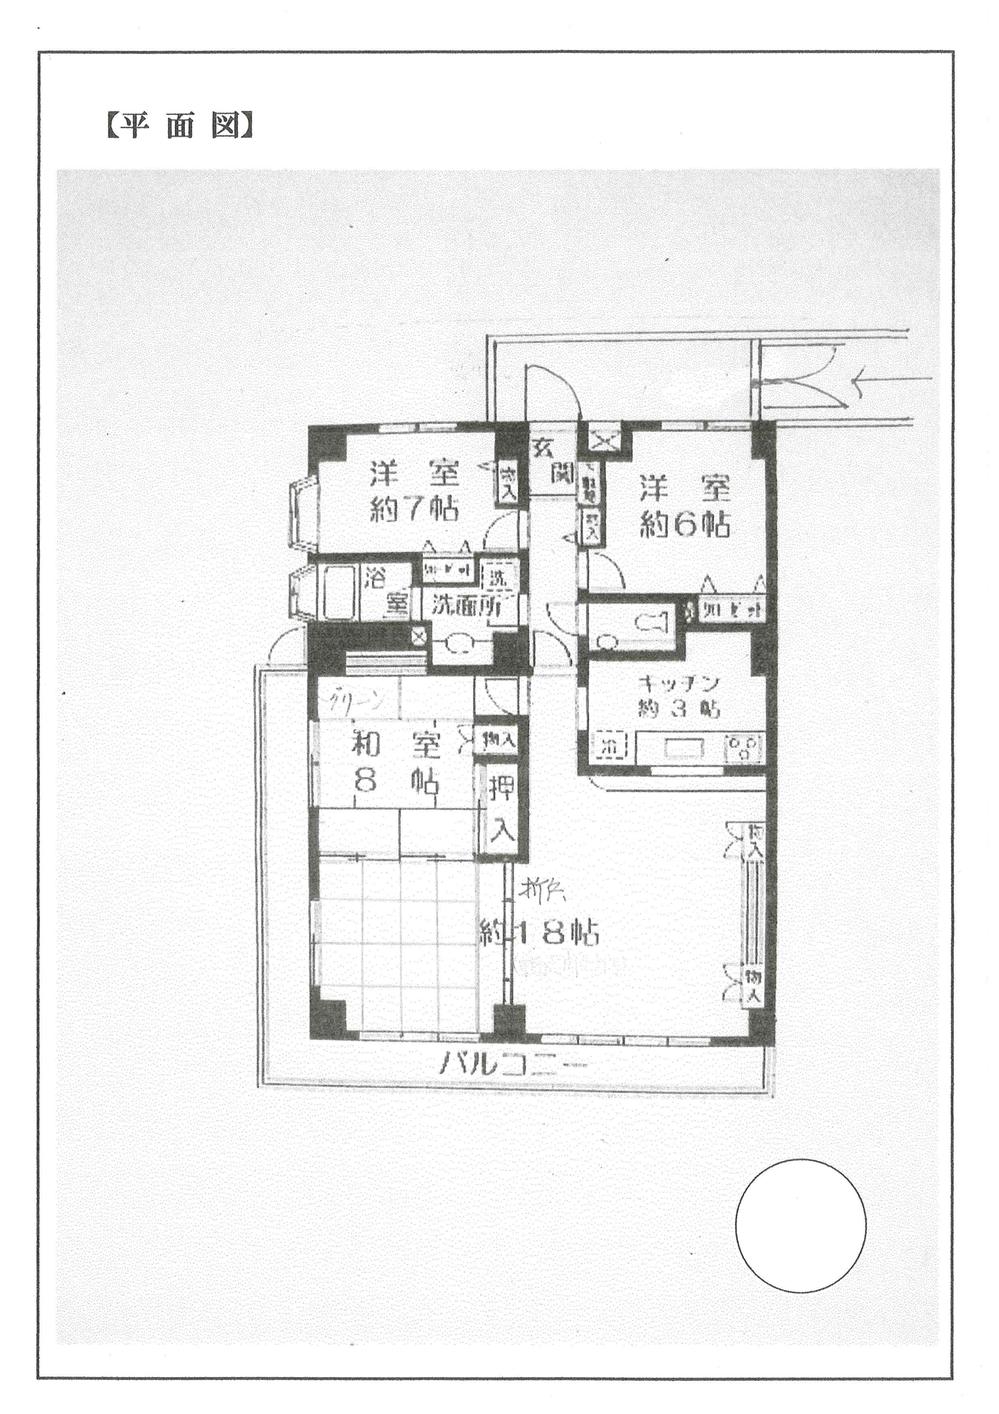 Floor plan. 4LDK, Price 15 million yen, Footprint 112.93 sq m , Balcony area 17.7 sq m